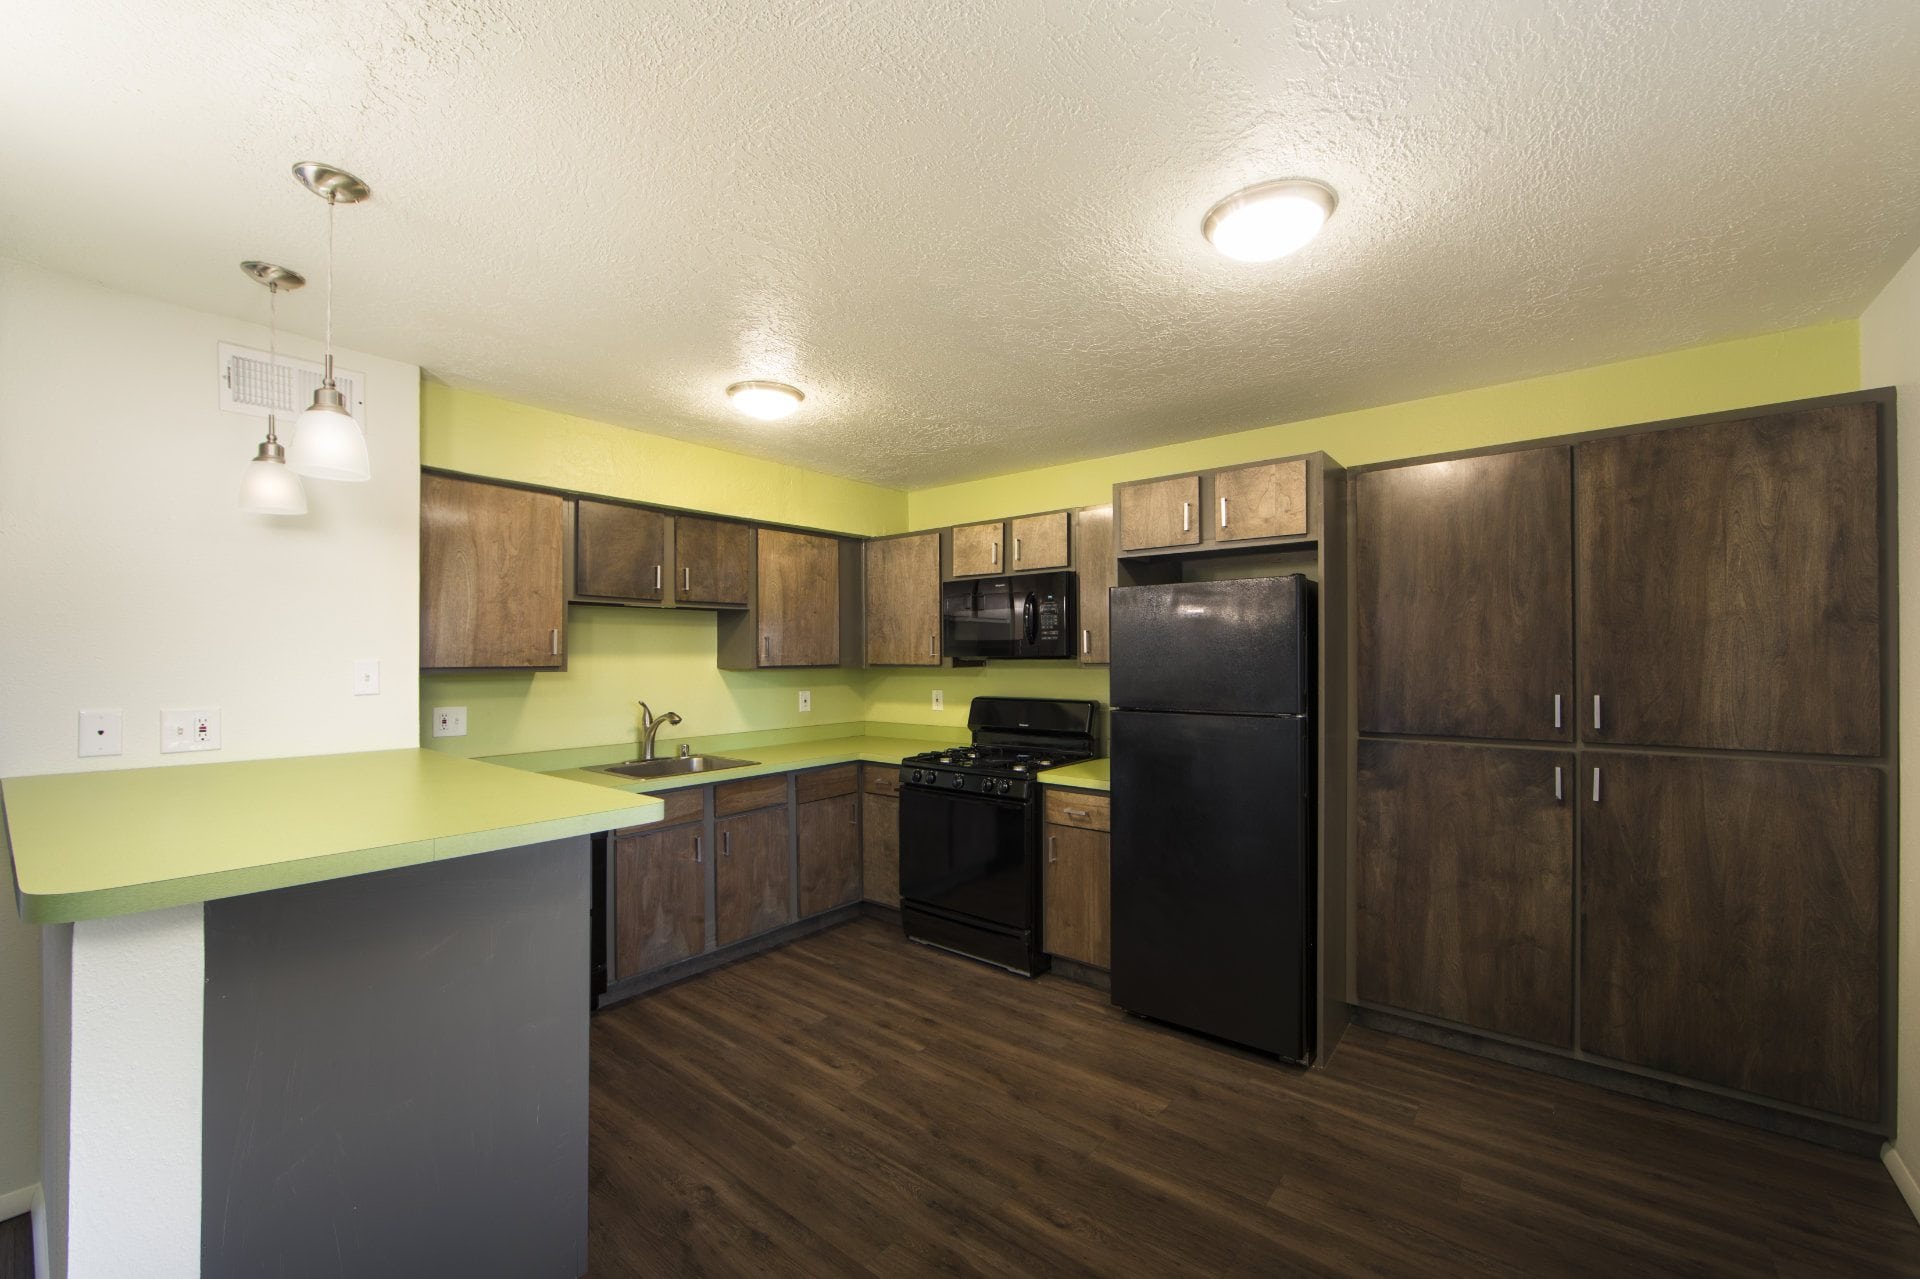 The Q @ Nob Hill - Marquette - Albuquerque, NM, US, income based apartments